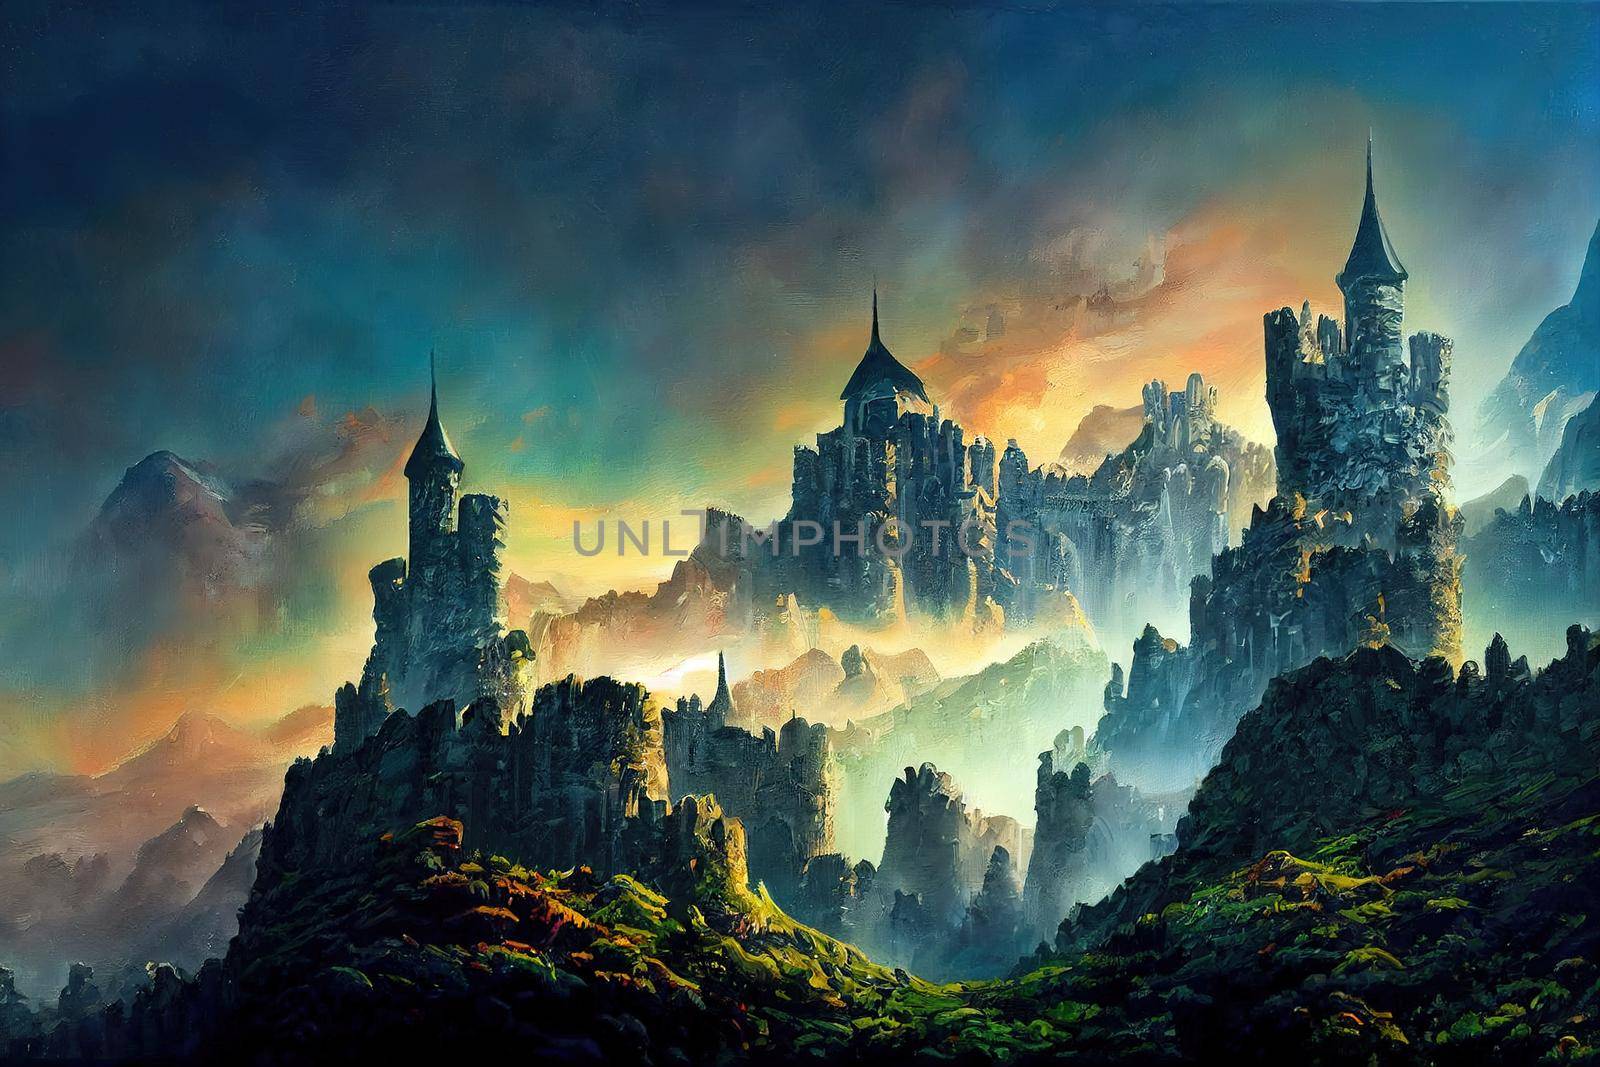 A futuristic castle in the mountains of fantasy. Oil by 2ragon